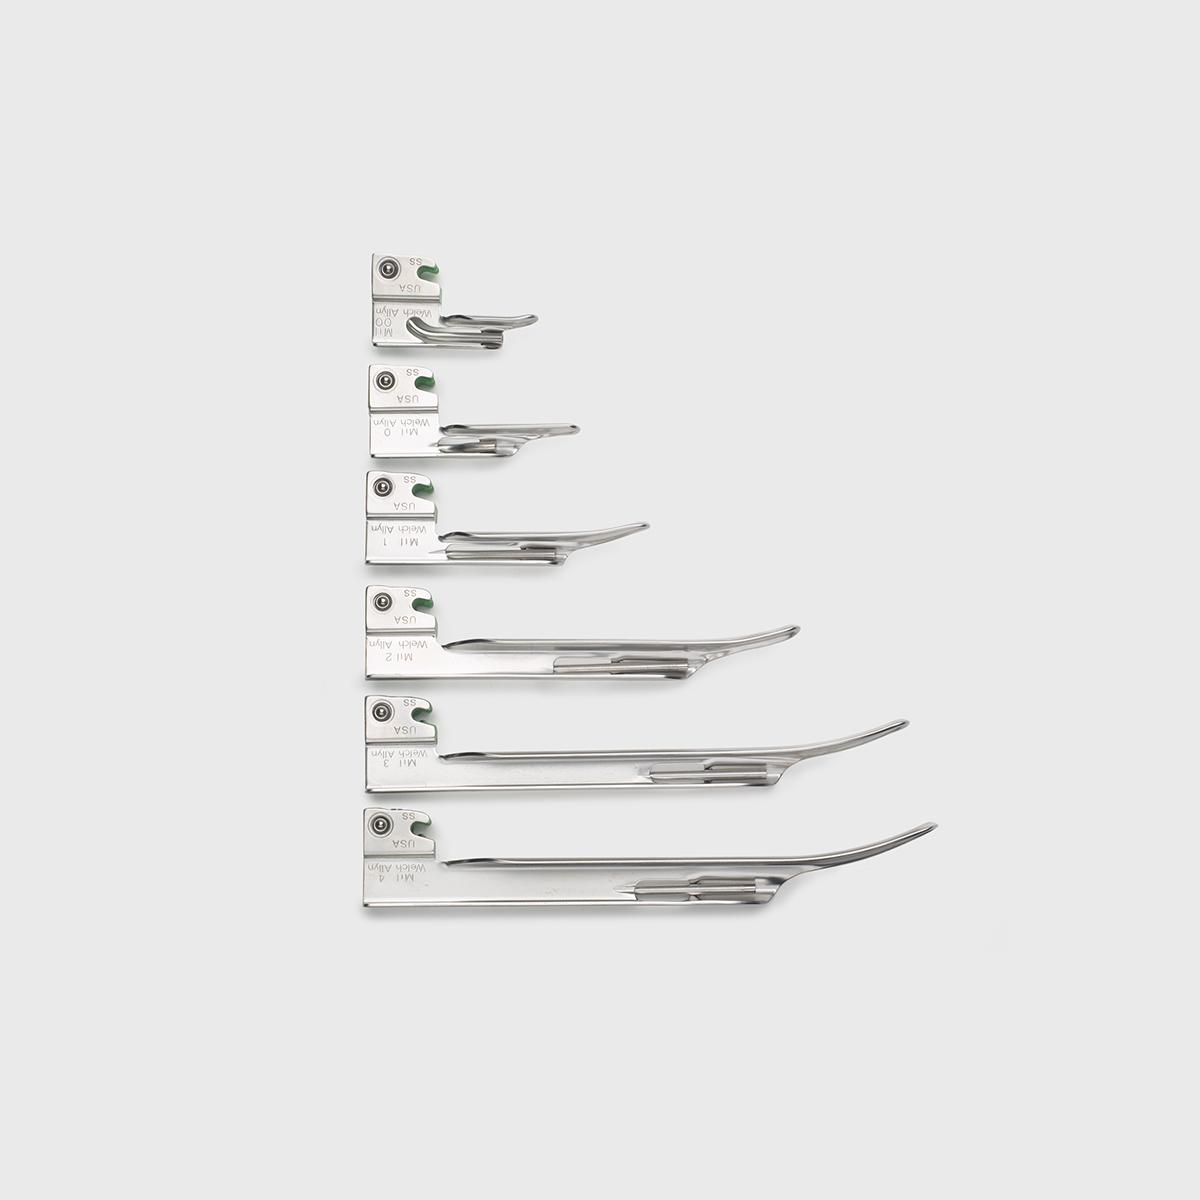 Six Miller Fibre Optic Laryngoscope System blades of various size